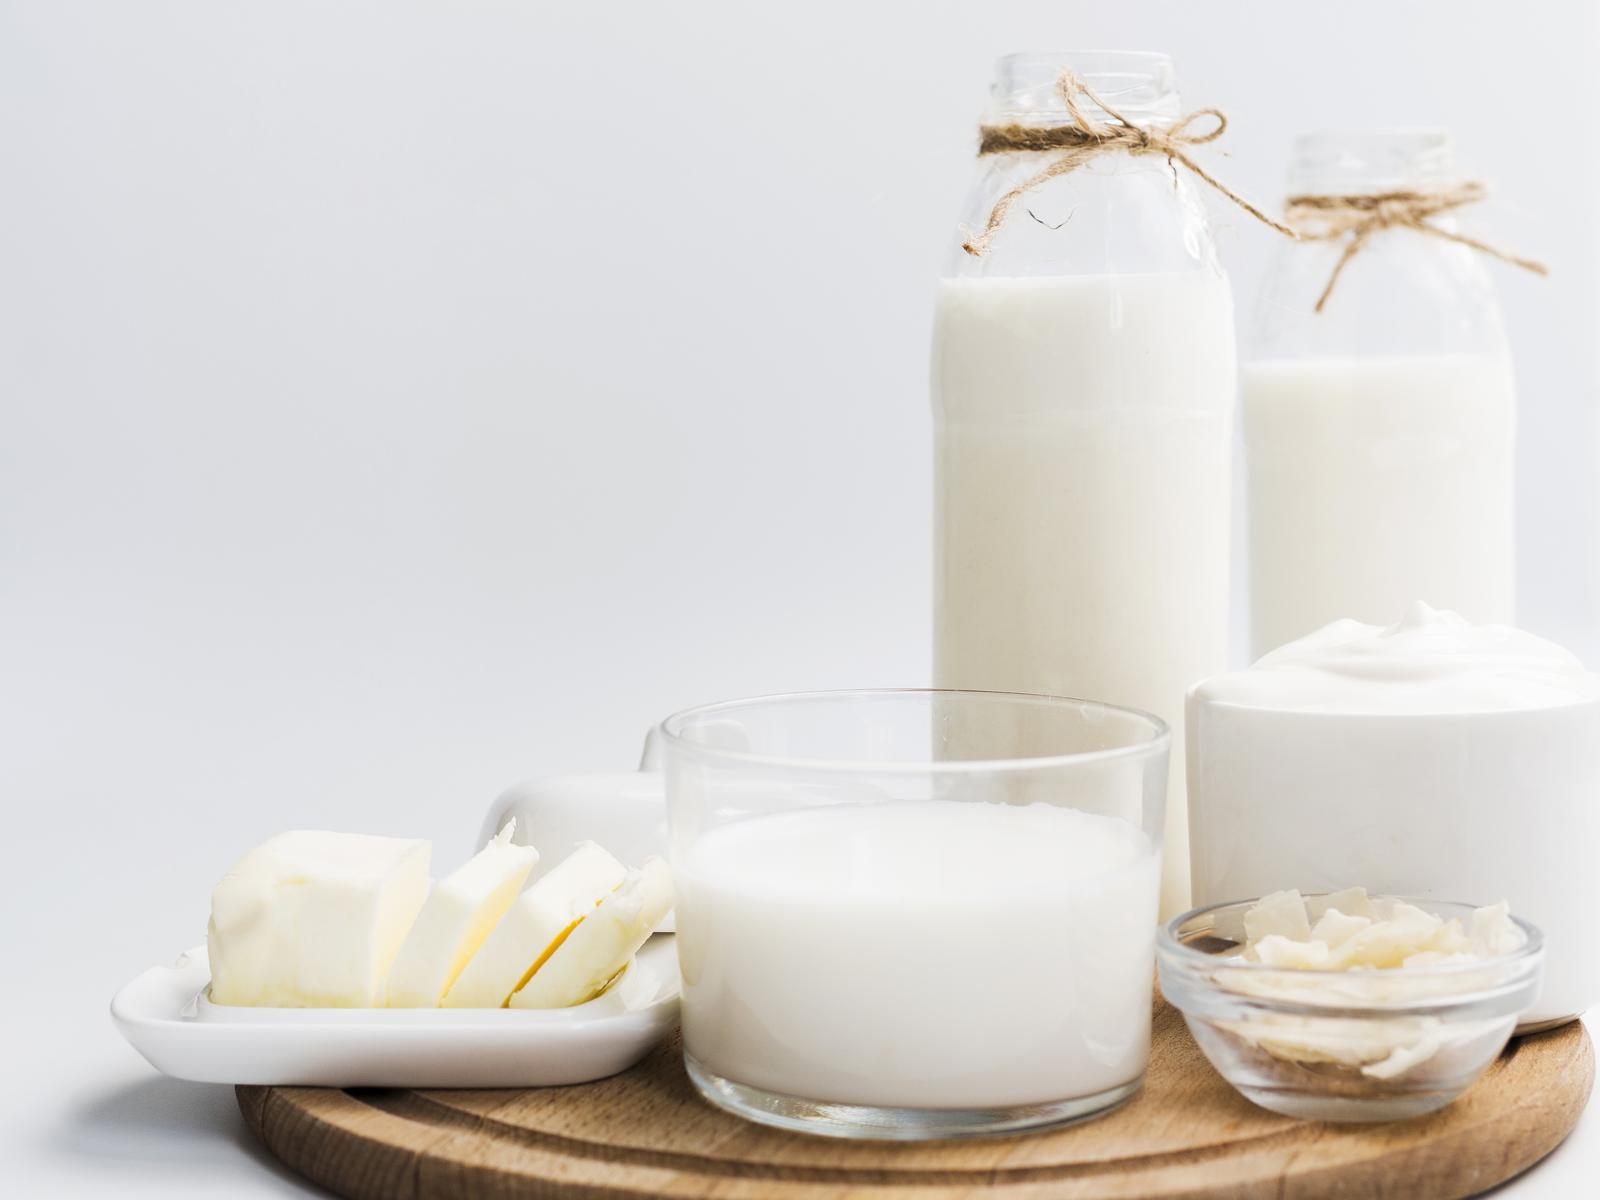 MÄTIKU TALUMEIEREI OÜ - dairy industry, manufacture of milk and milk products, the Food Industry